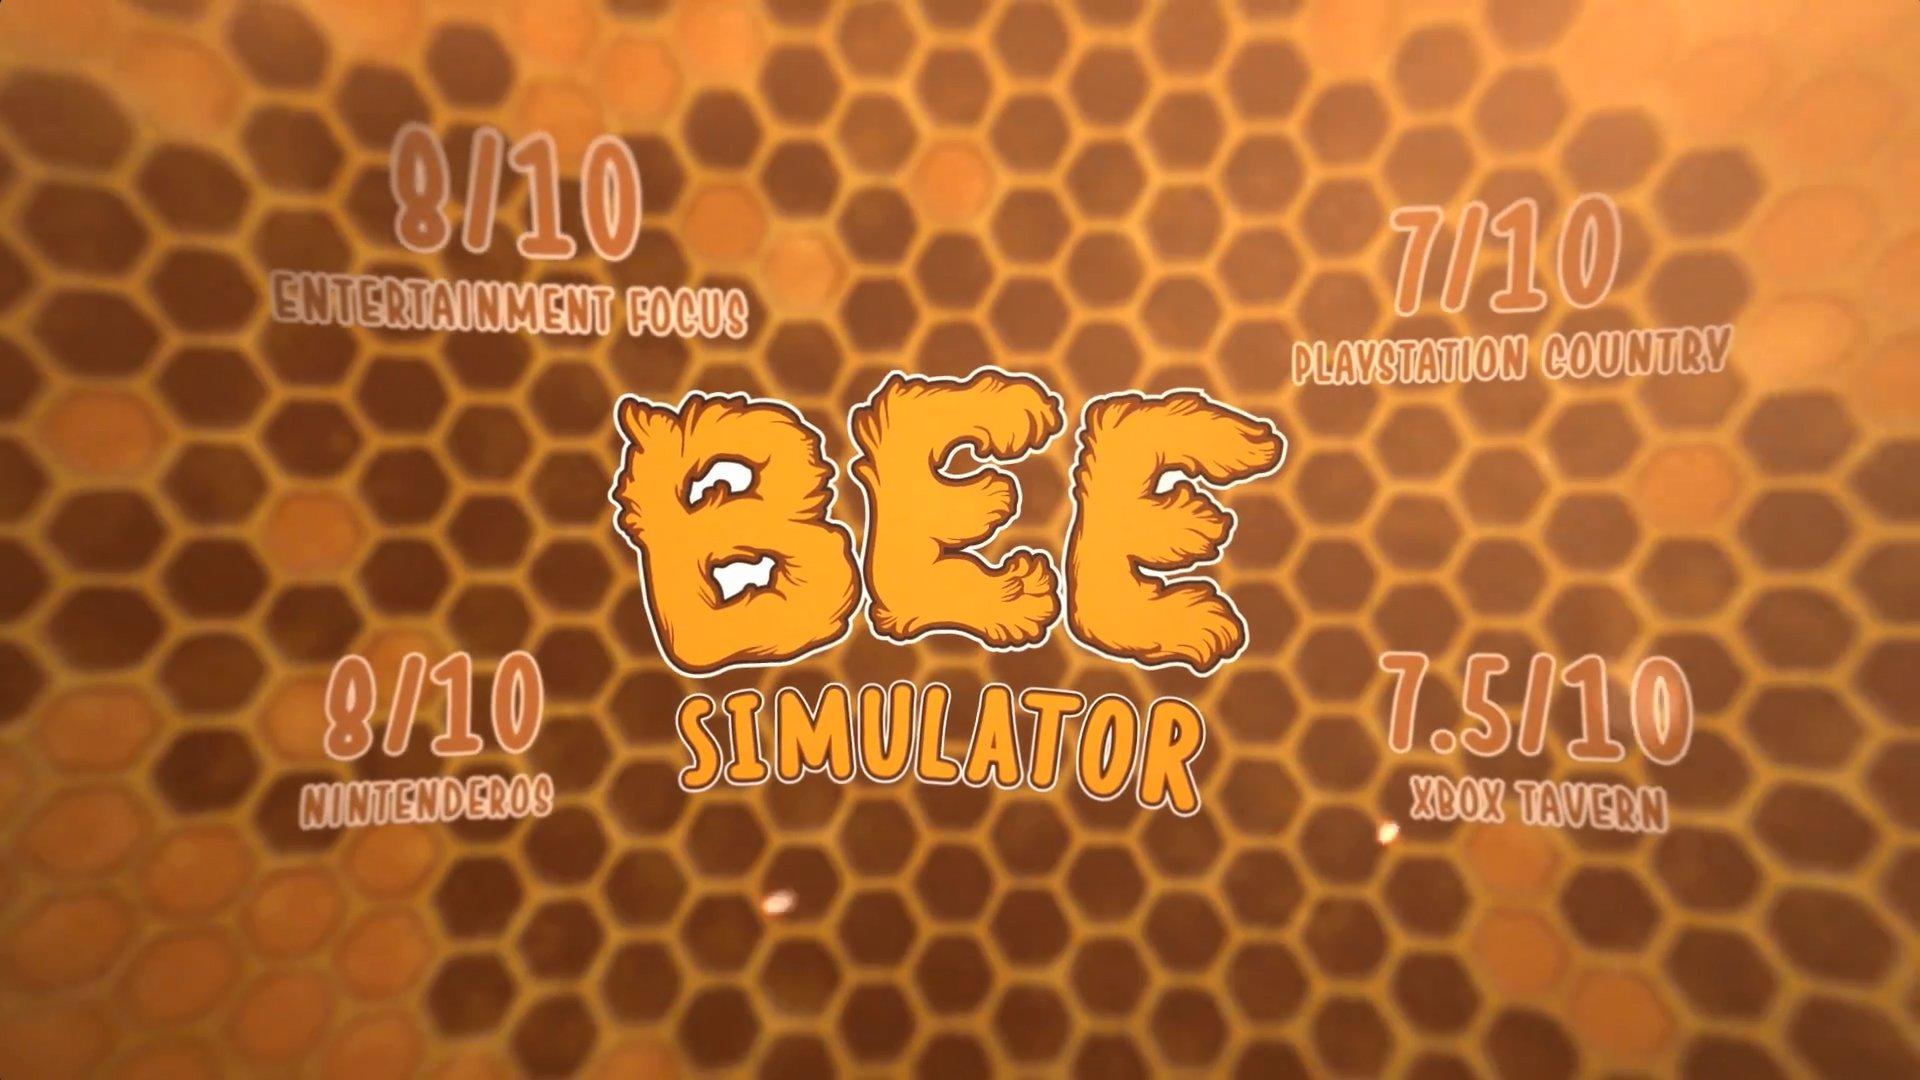 bee simulator nintendo switch